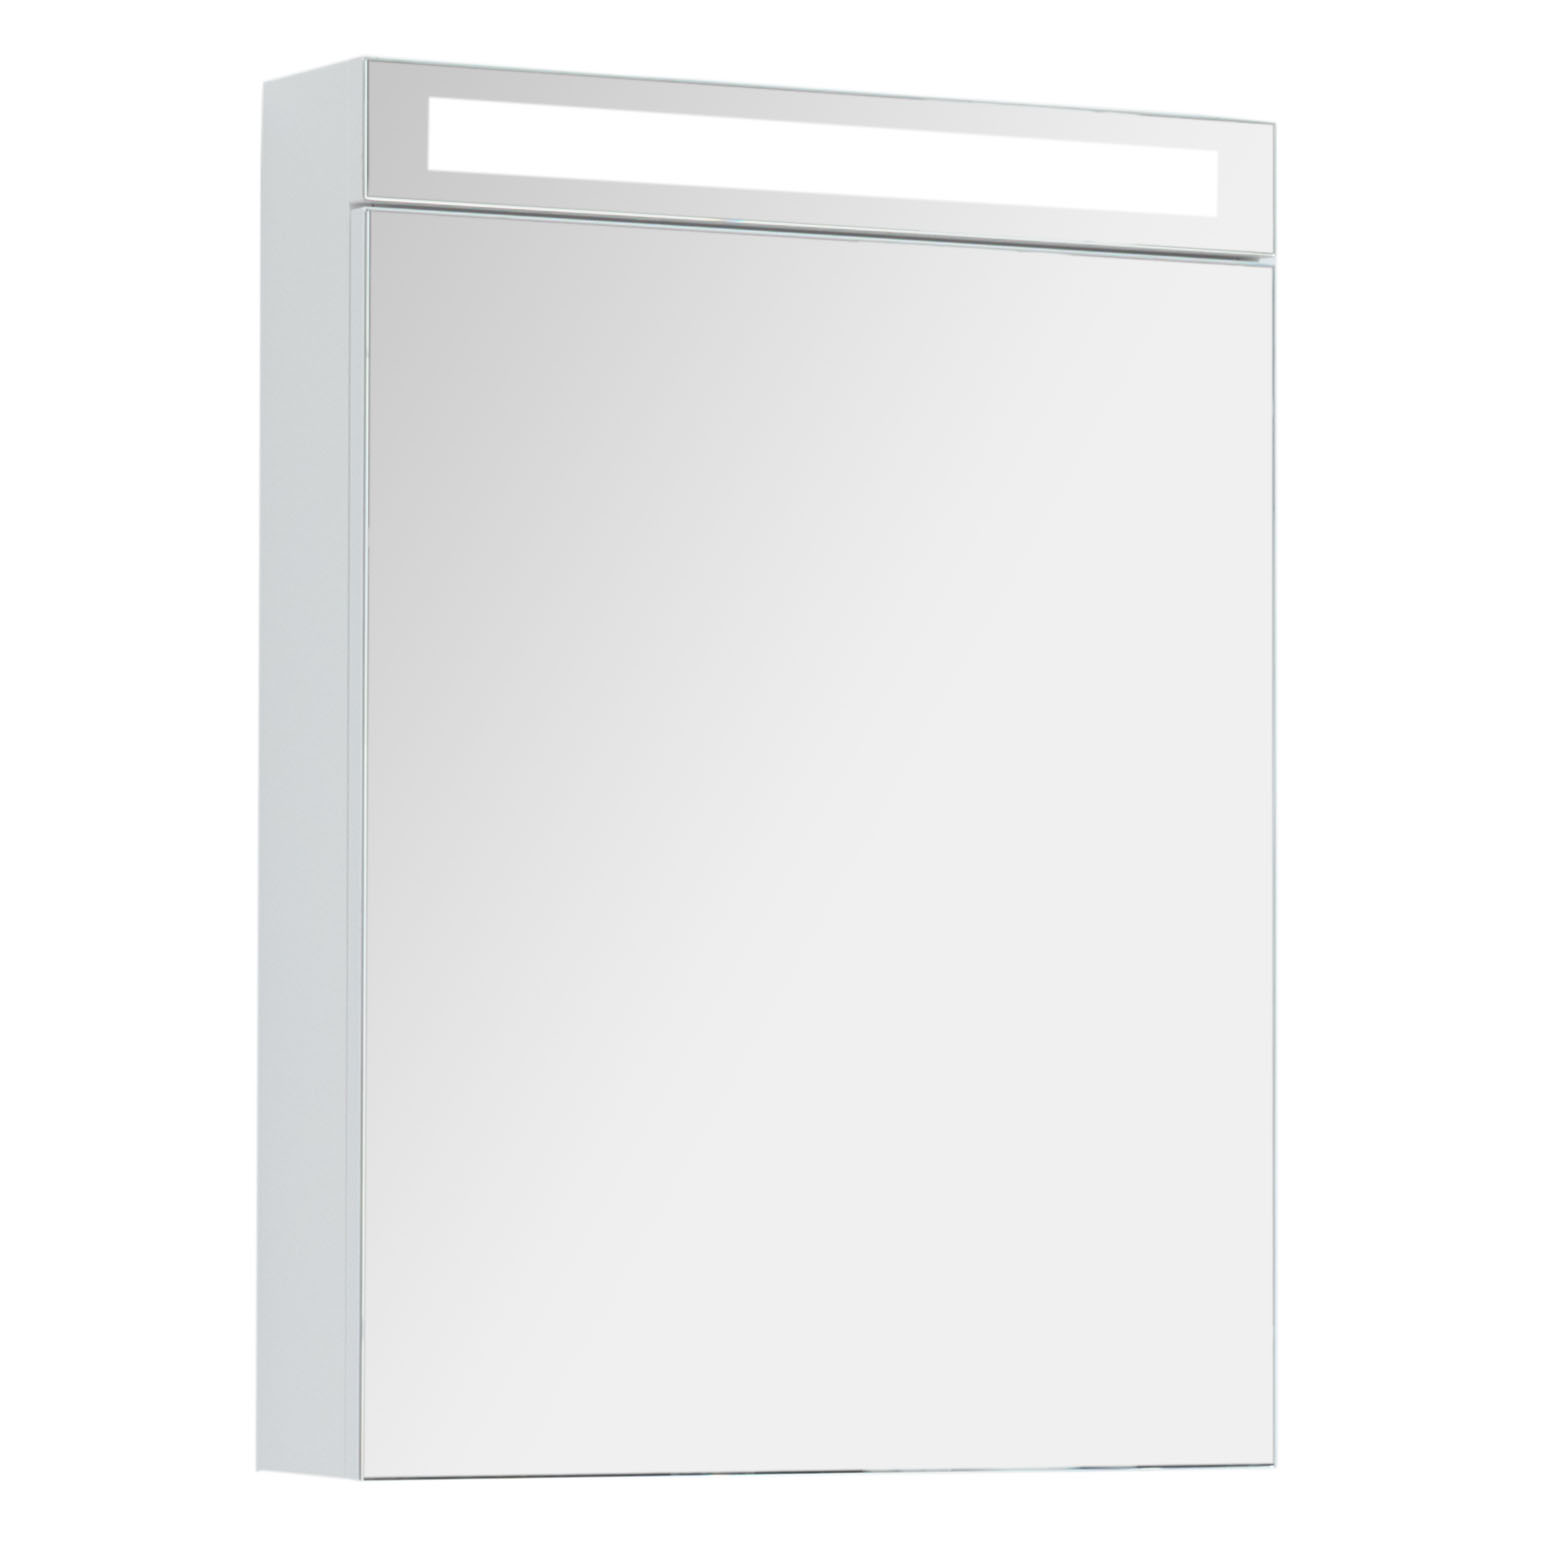 Зеркальный шкаф для ванной Dreja Max 60 белый глянец зеркальный шкаф для ванной roca gap 80 белый глянец